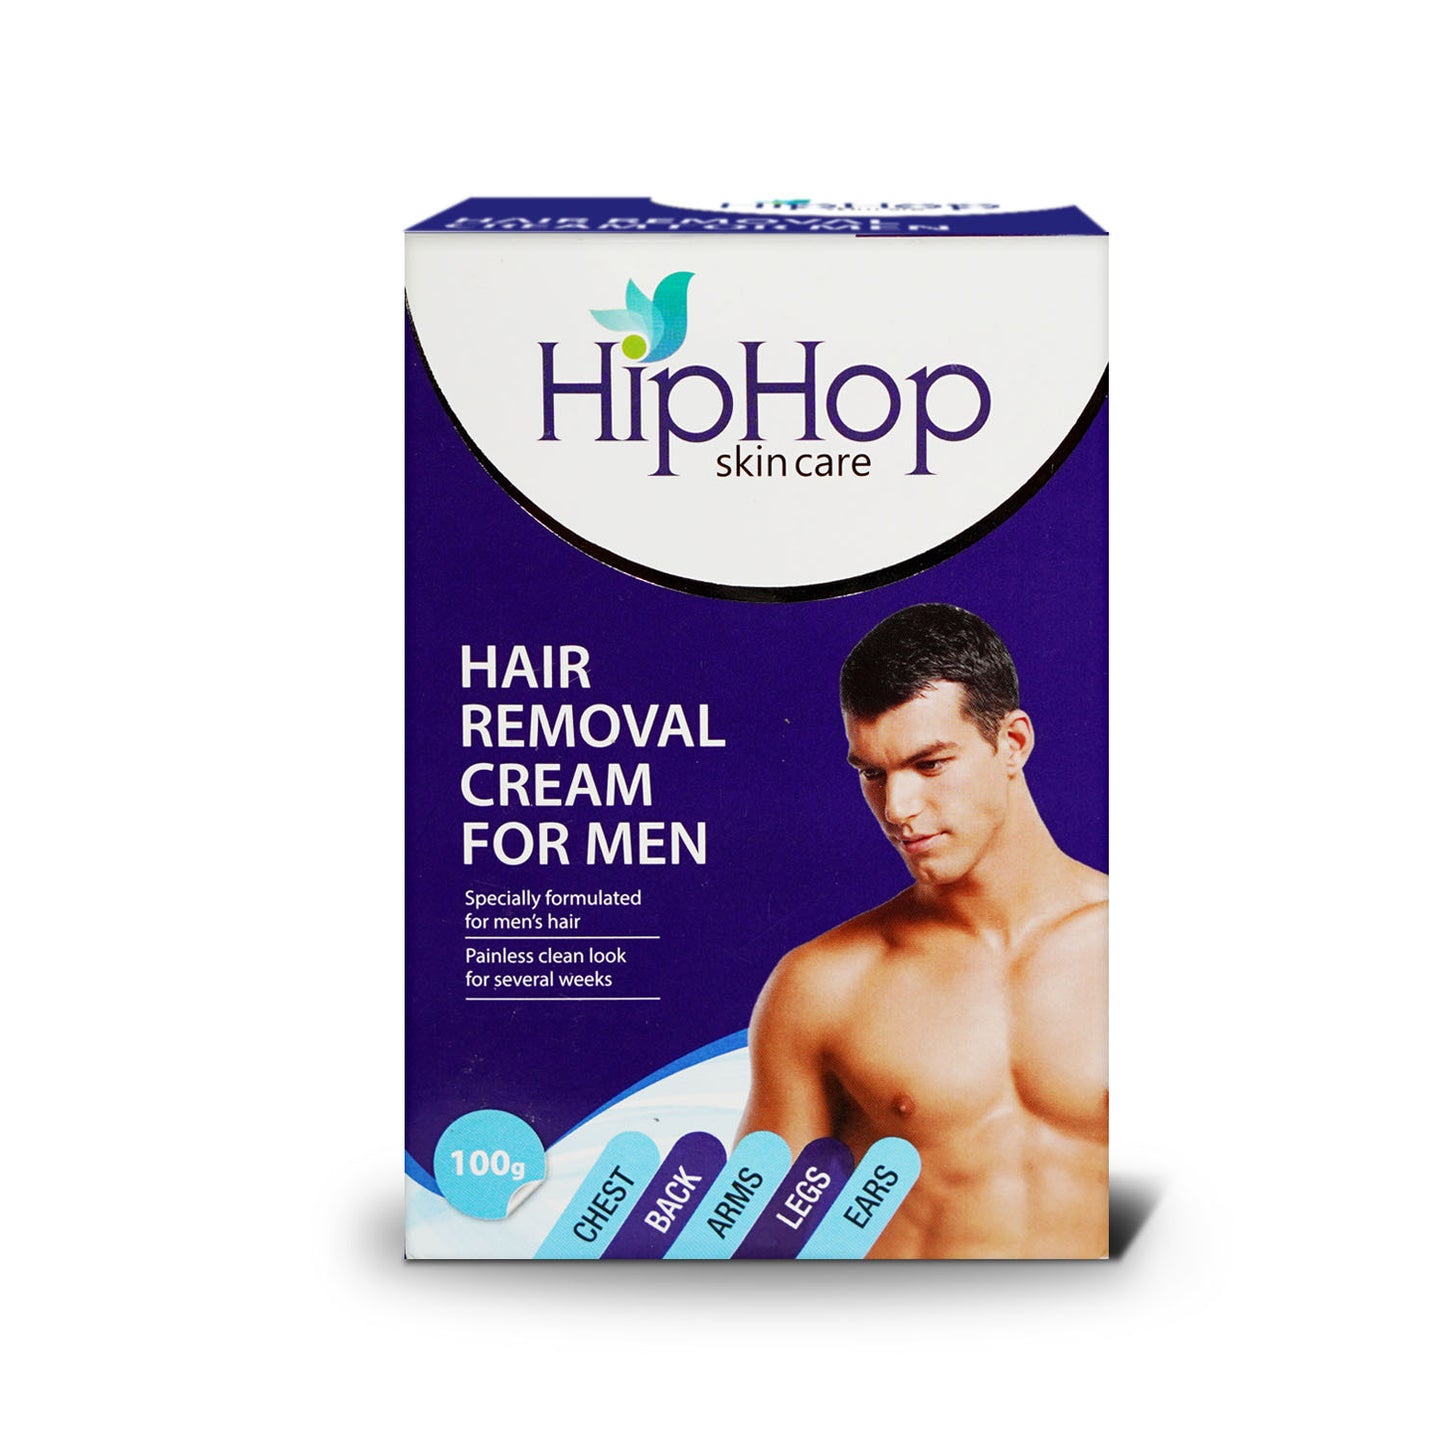 HipHop Bikini & Underarm Wax Strips (Argan Oil, 12 Strips) + Hair Removal Cream for Men (Aleo Vera, 100gm)